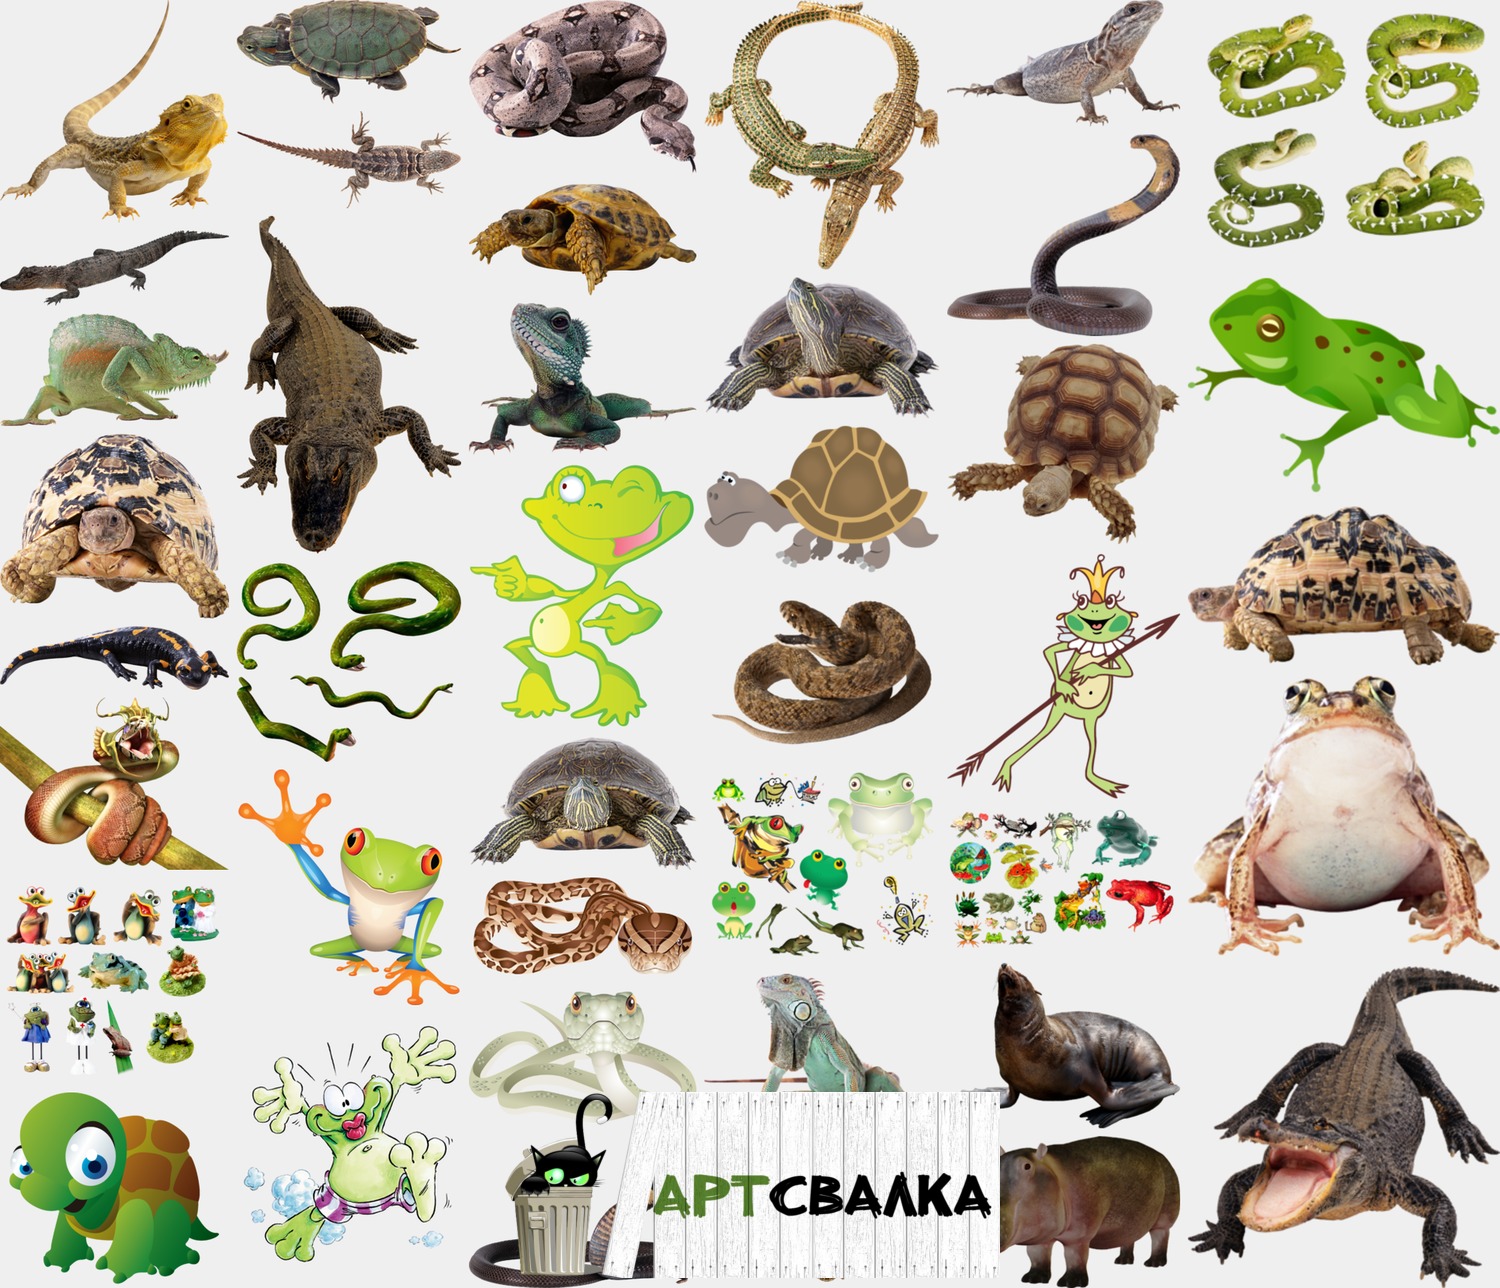 Змеи, ящерицы, черепашки, крокодилы, жабы и бегемот. | Snakes, lizards, turtles, crocodiles, frogs, and Behemoth.